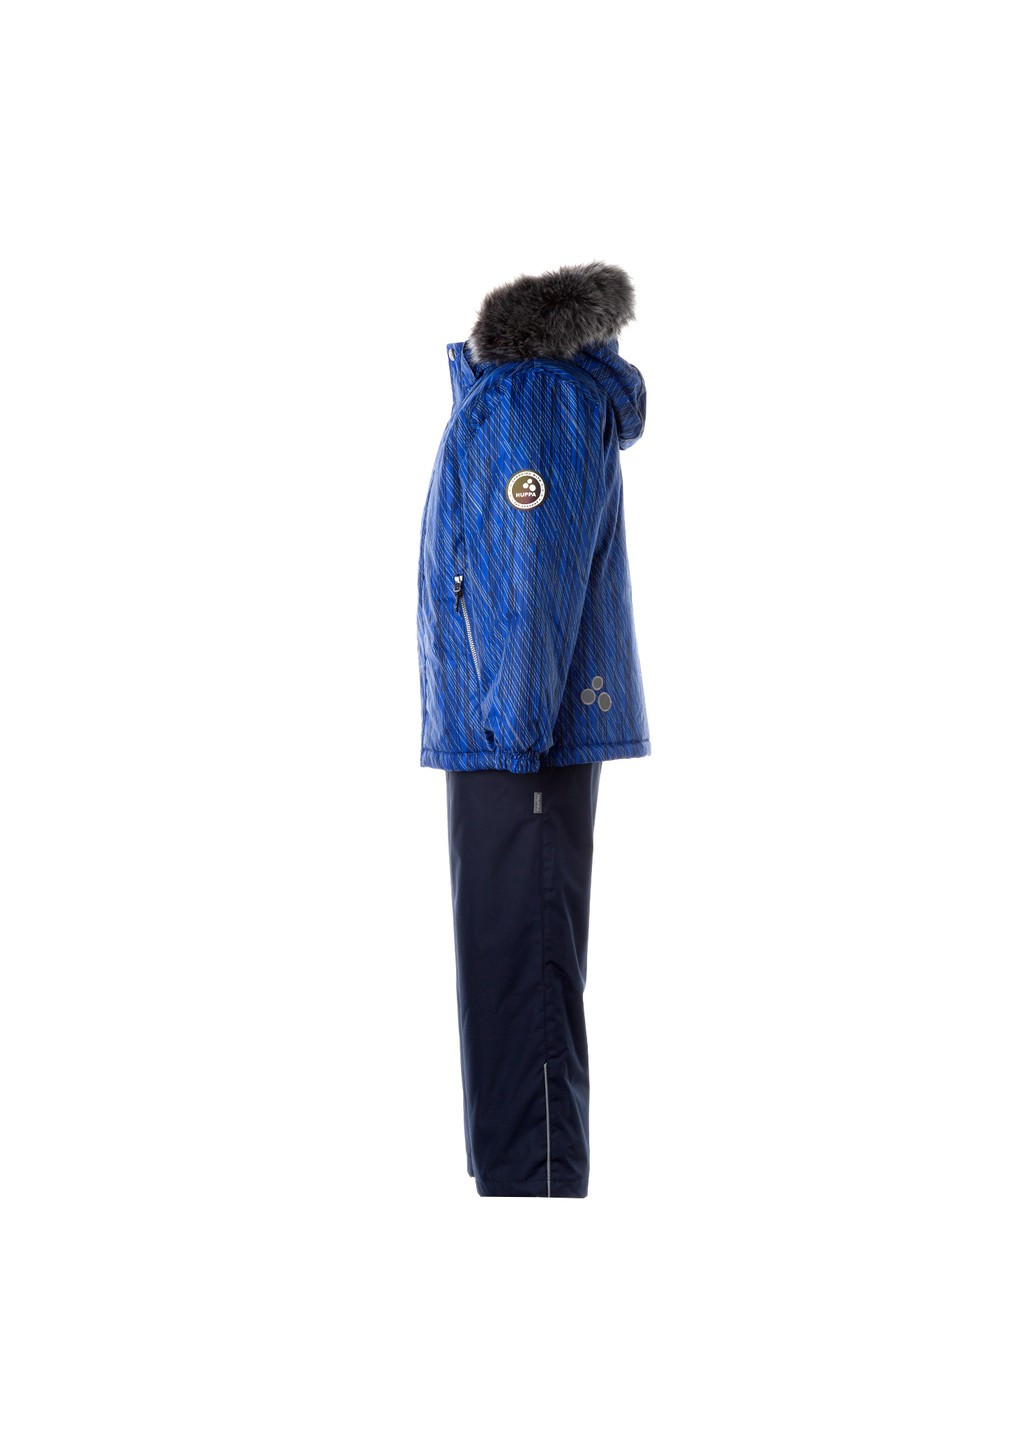 Синий зимний комплект зимний (куртка + полукомбинезон) dante 1 Huppa